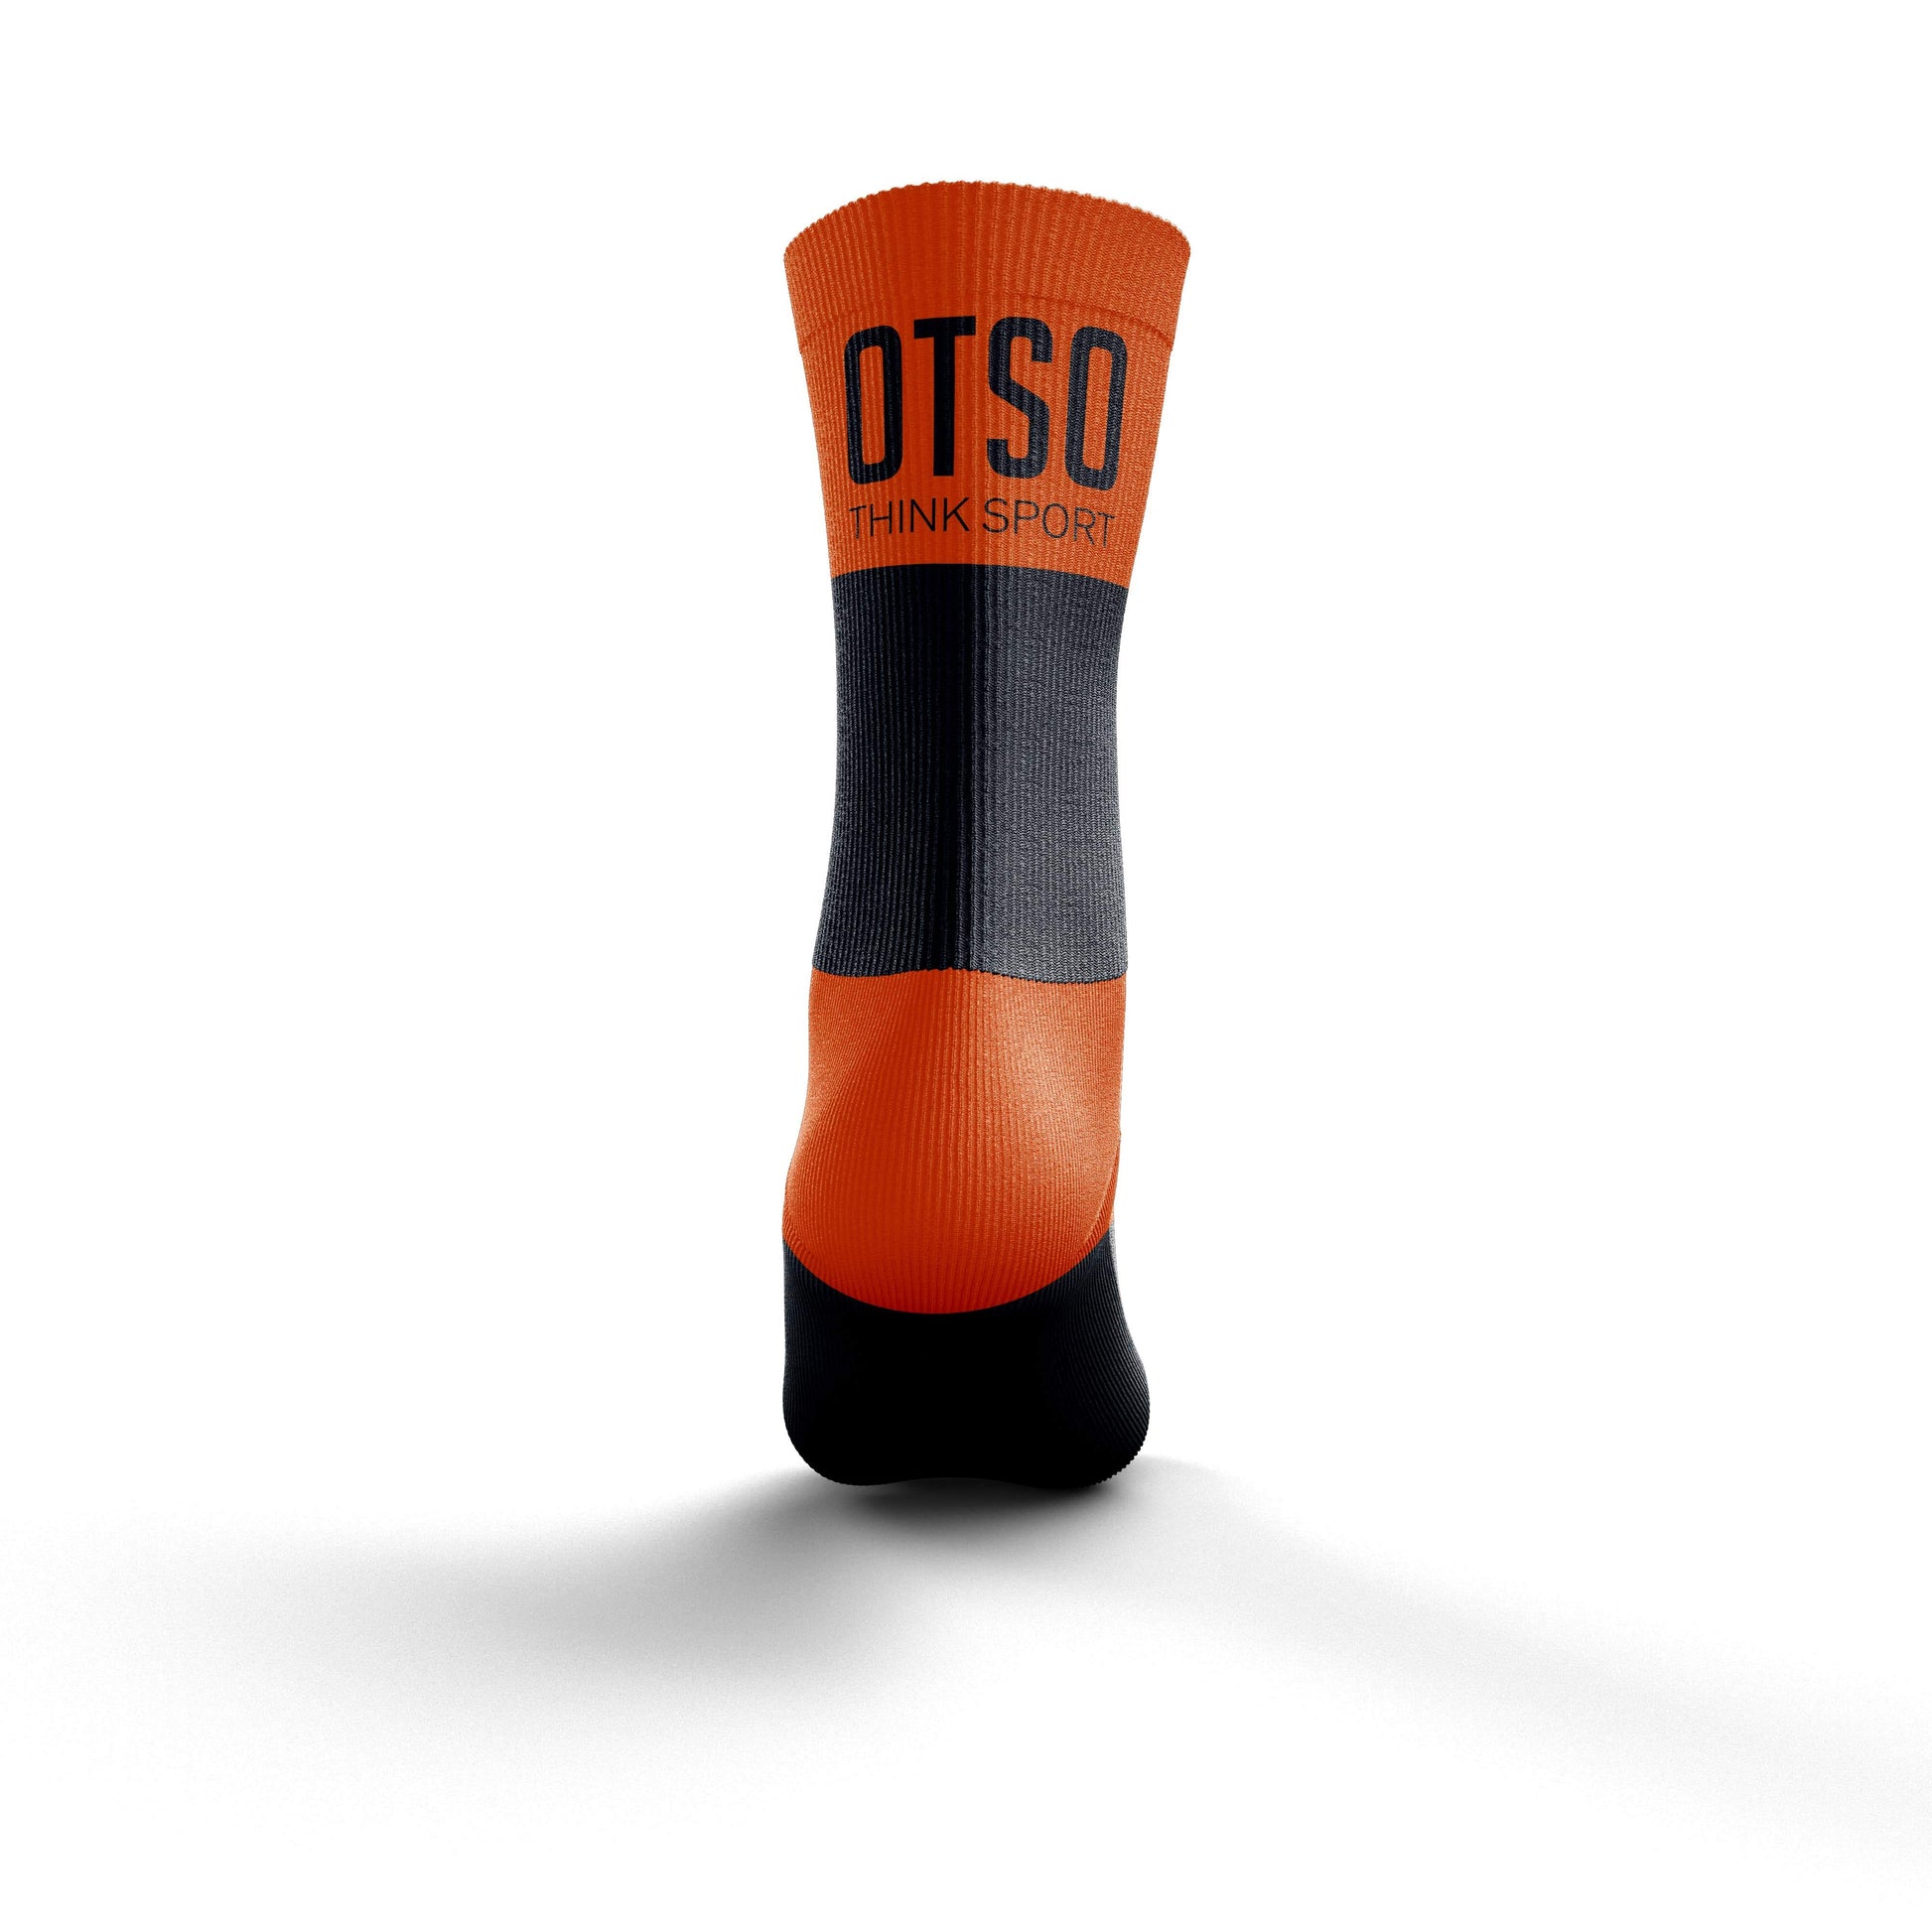 Calcetines de media altura de la marca Otso de color naranja y negro. Foto trasera